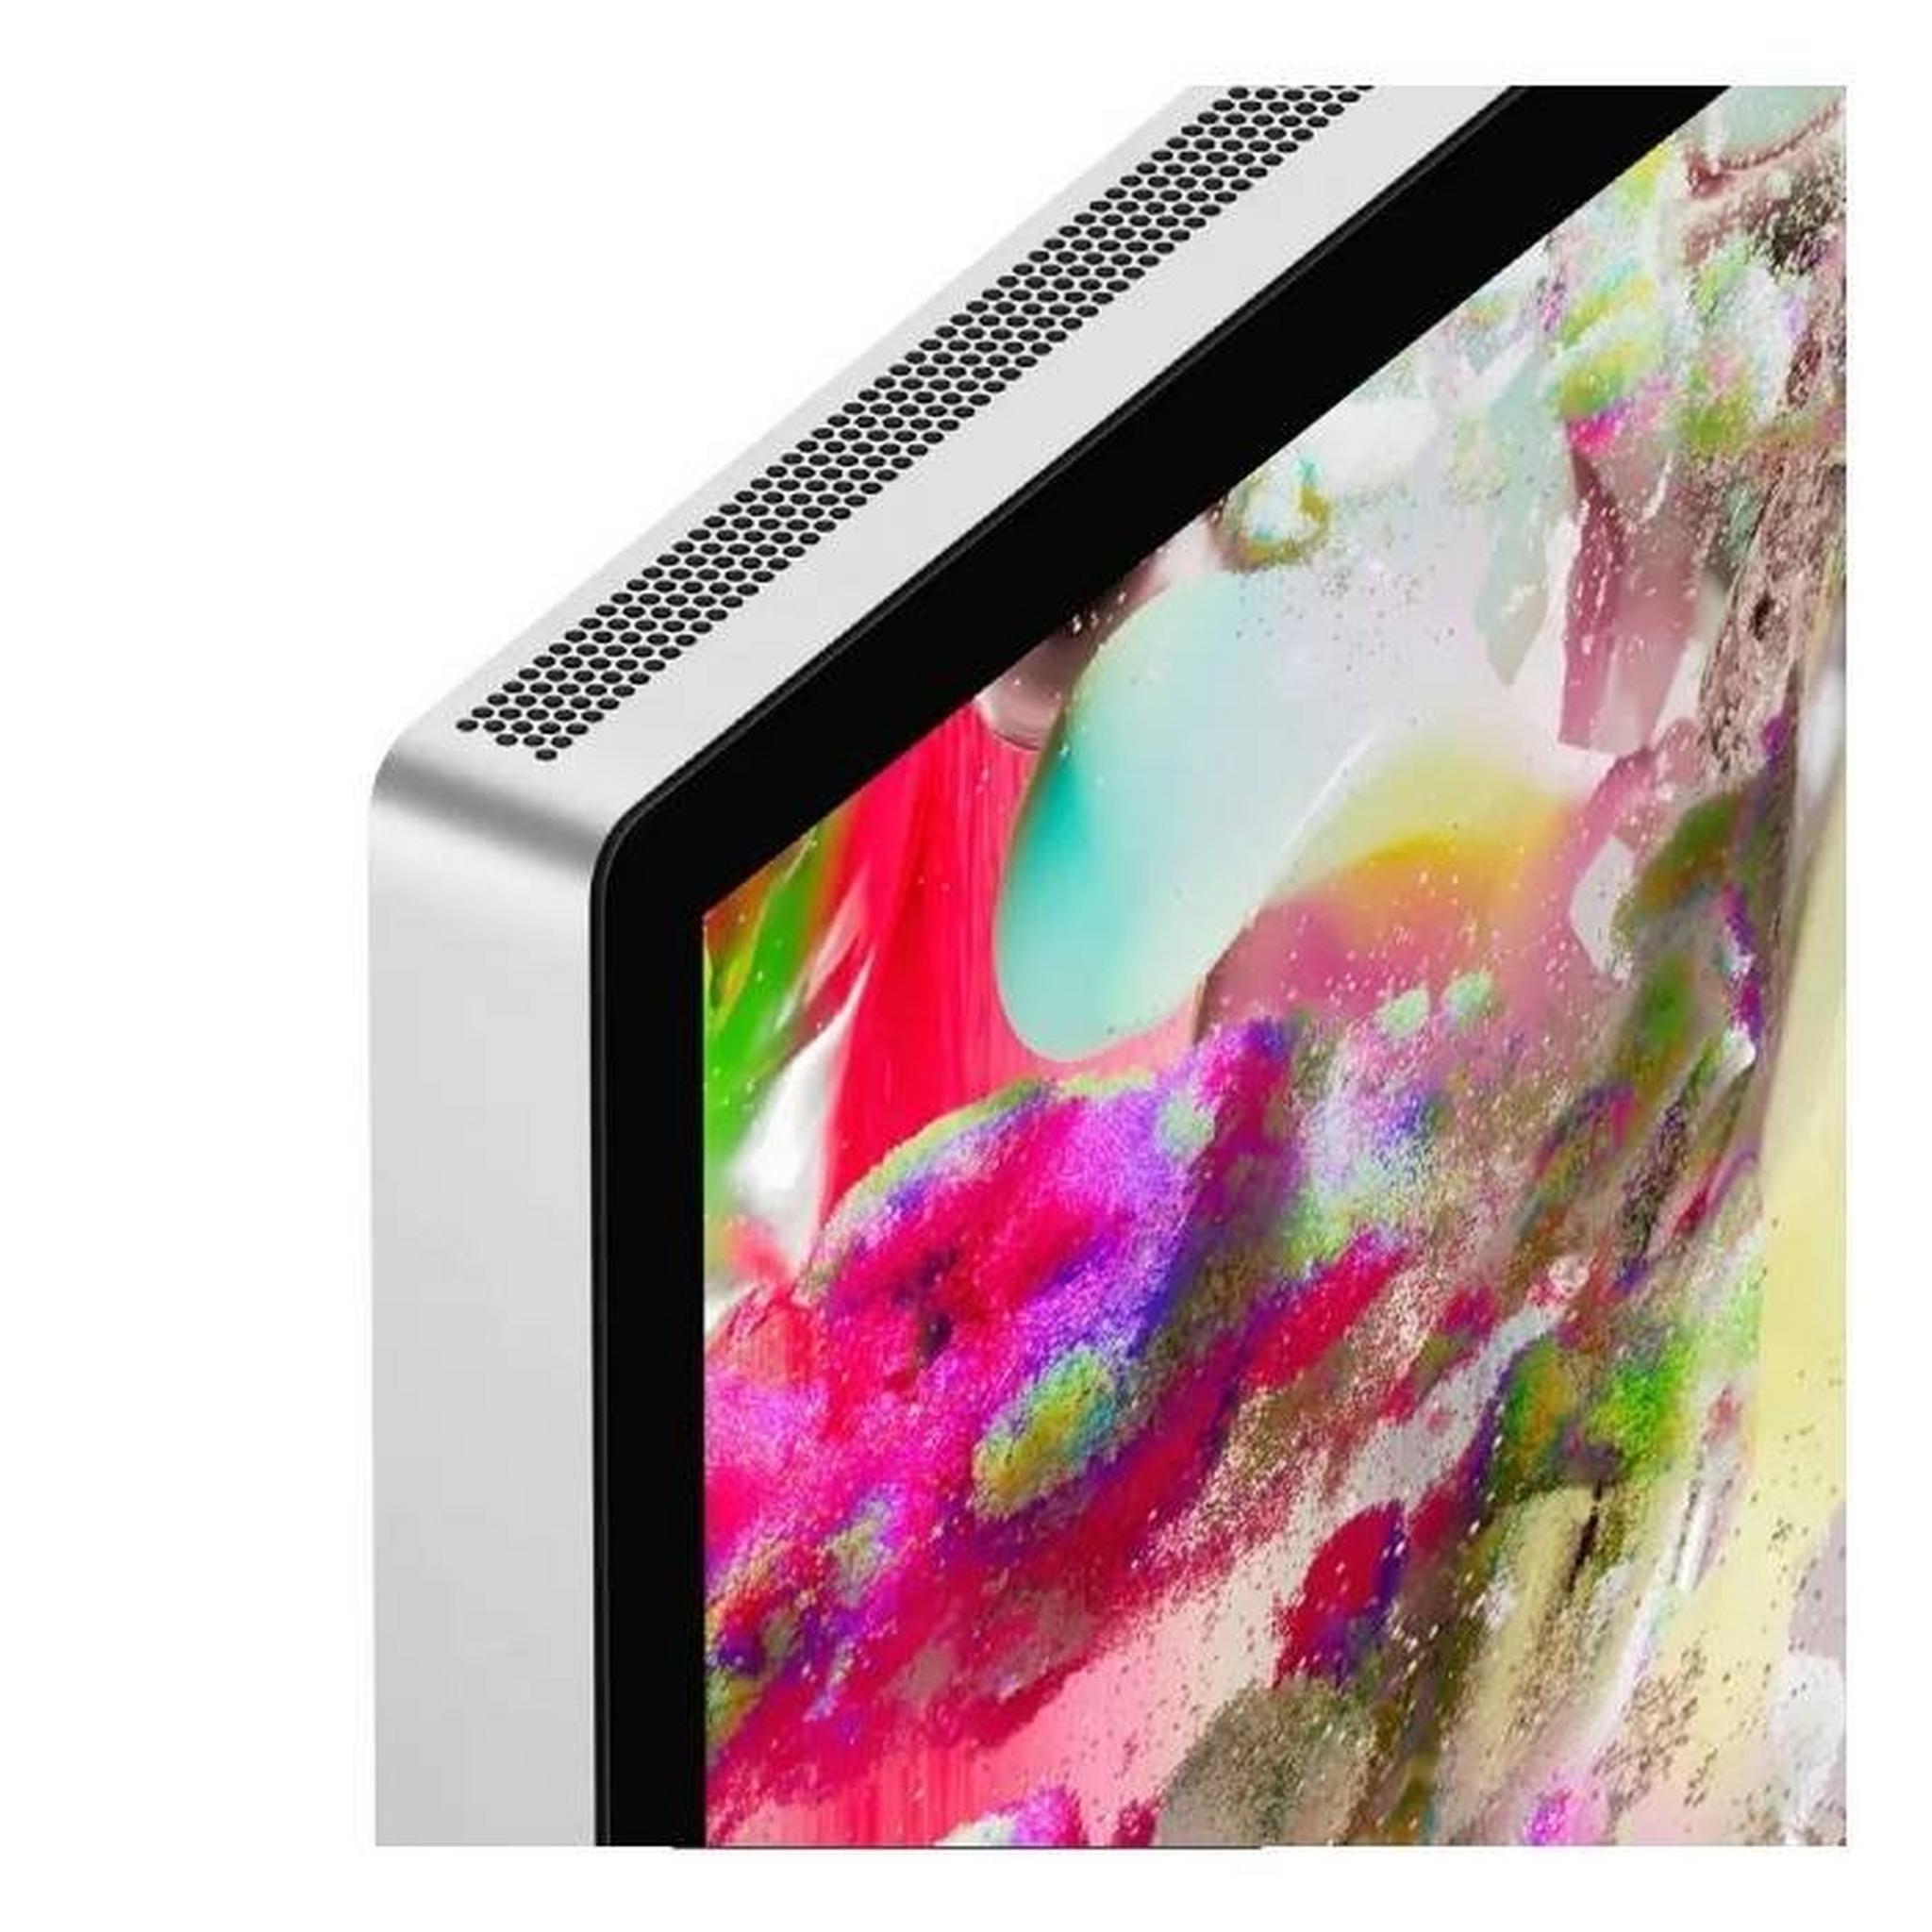 Apple Studio Display Nano-Texture Glass LCD Monitor, 27-inch, 5k Display, Tilt-Adjustable Stand, MMYV3AB/A – Silver